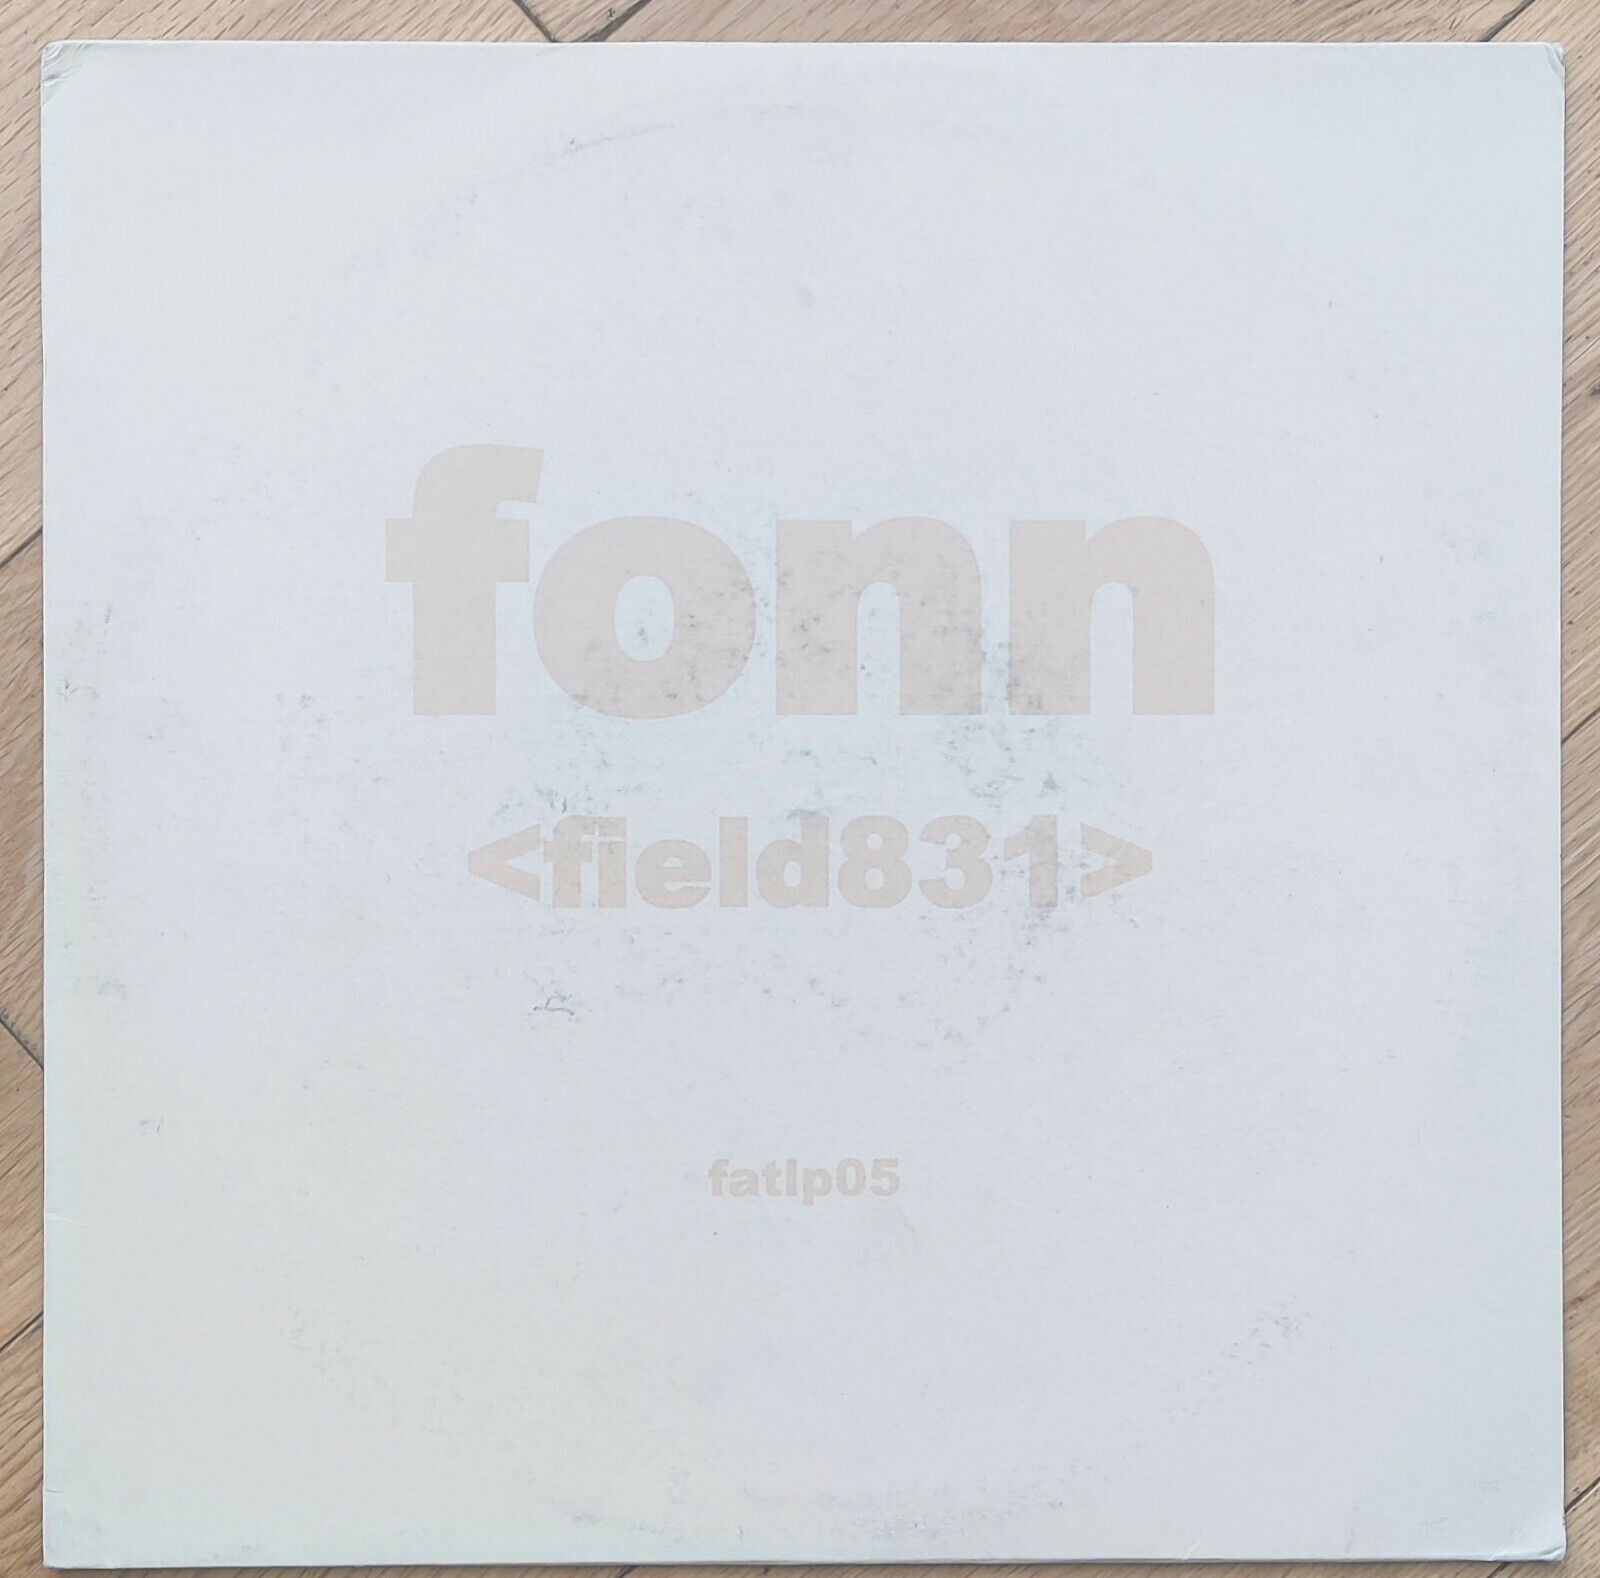 Fonn - Field831 LP Vinyl Record 1999 Fatcat Records